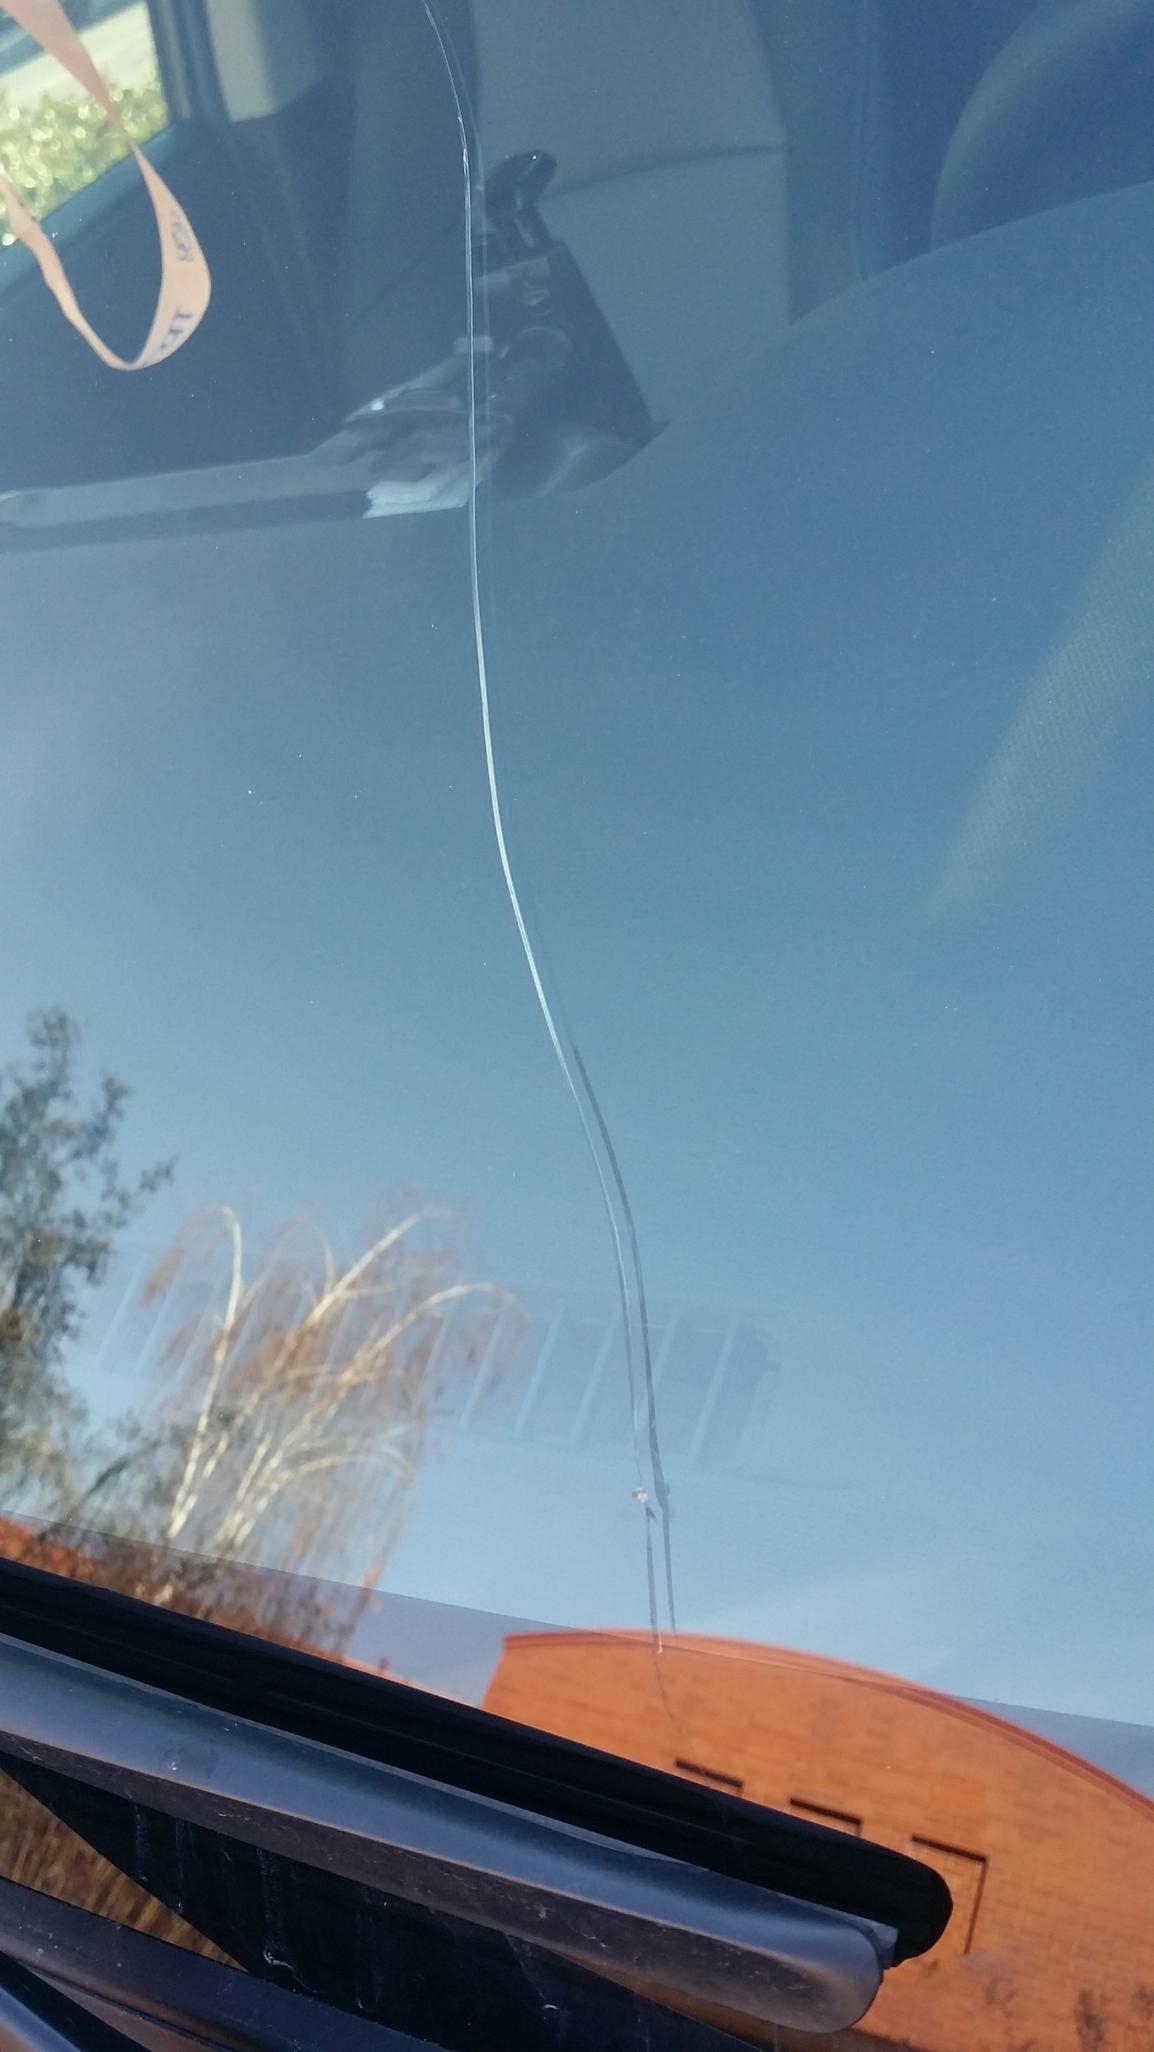 Windshield de-icer cracks the windshield-cracked-windshield-jpg